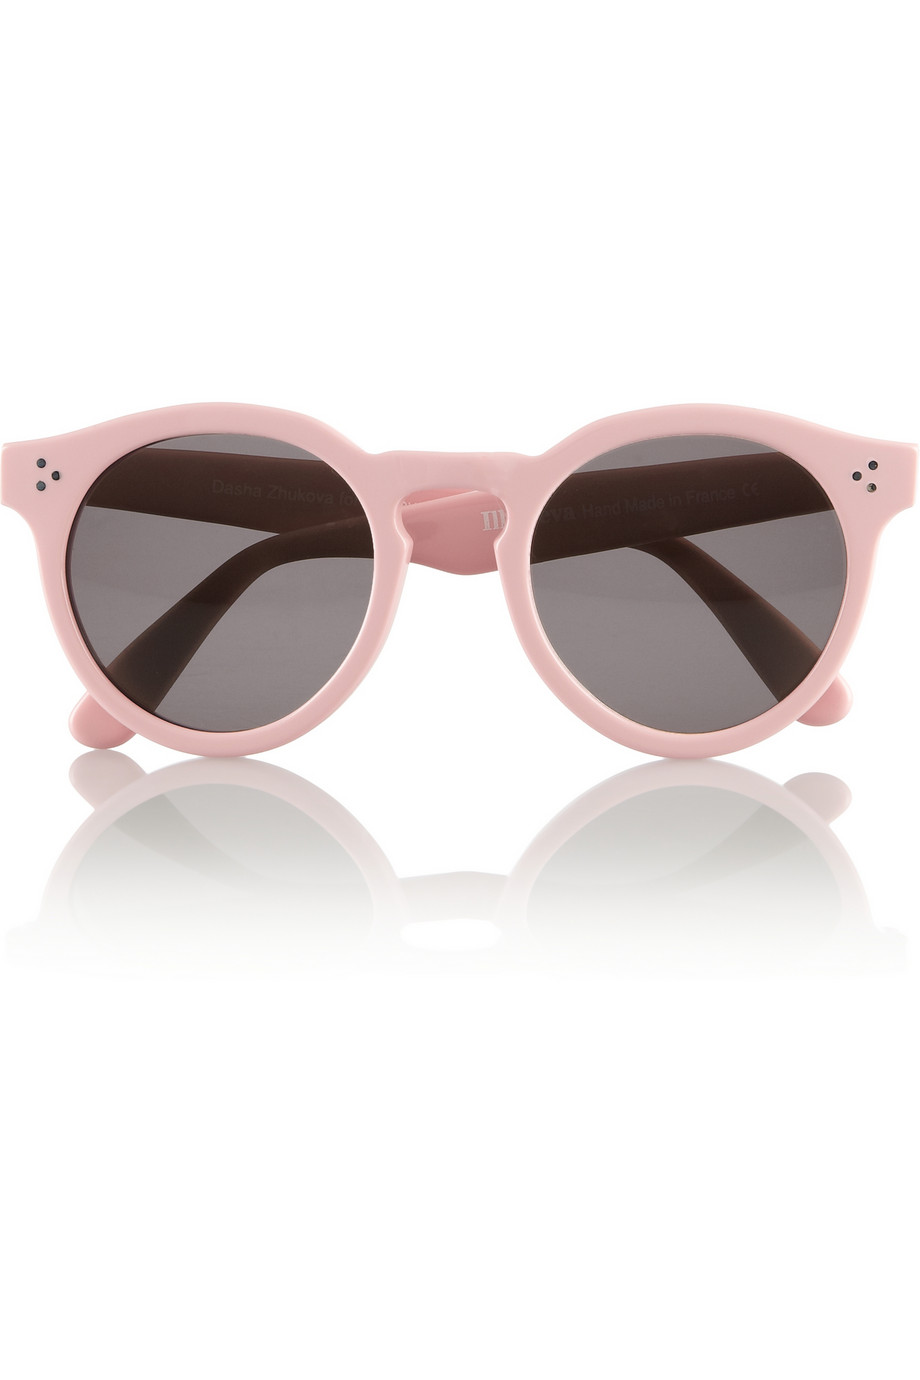 Lyst - Illesteva Round Frame Acetate Sunglasses in Pink